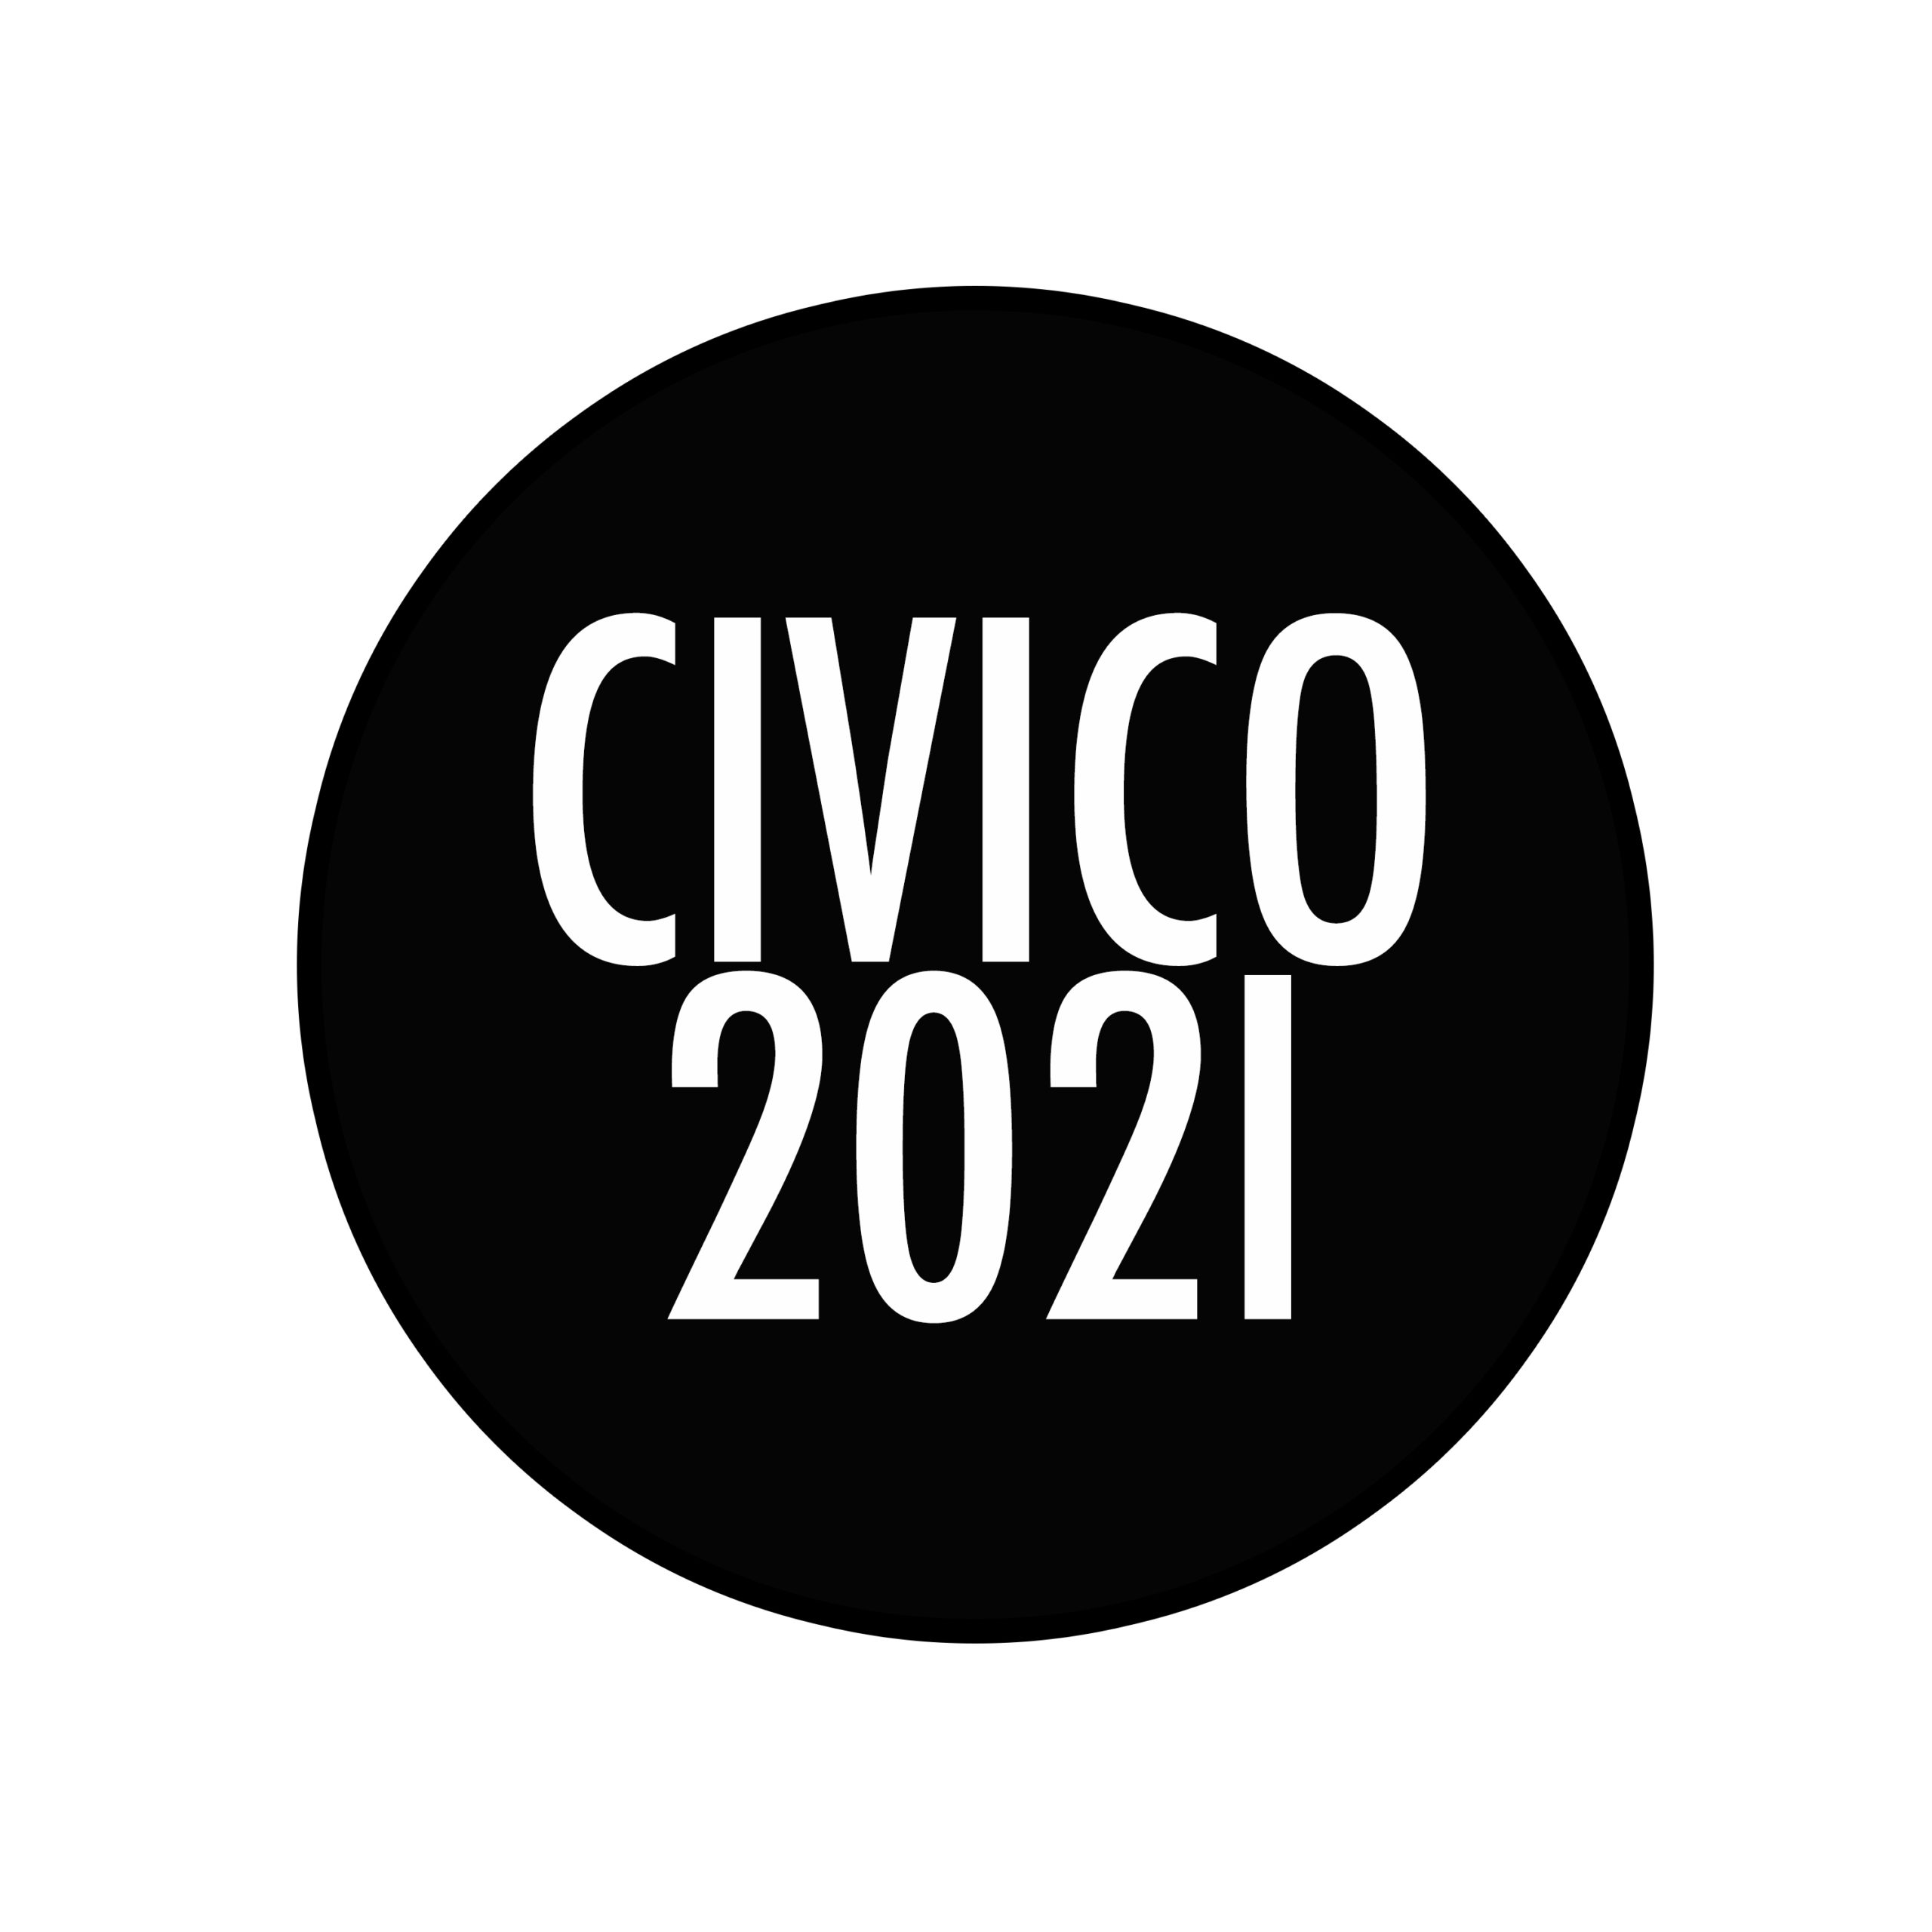 CIVICO 2021 nero